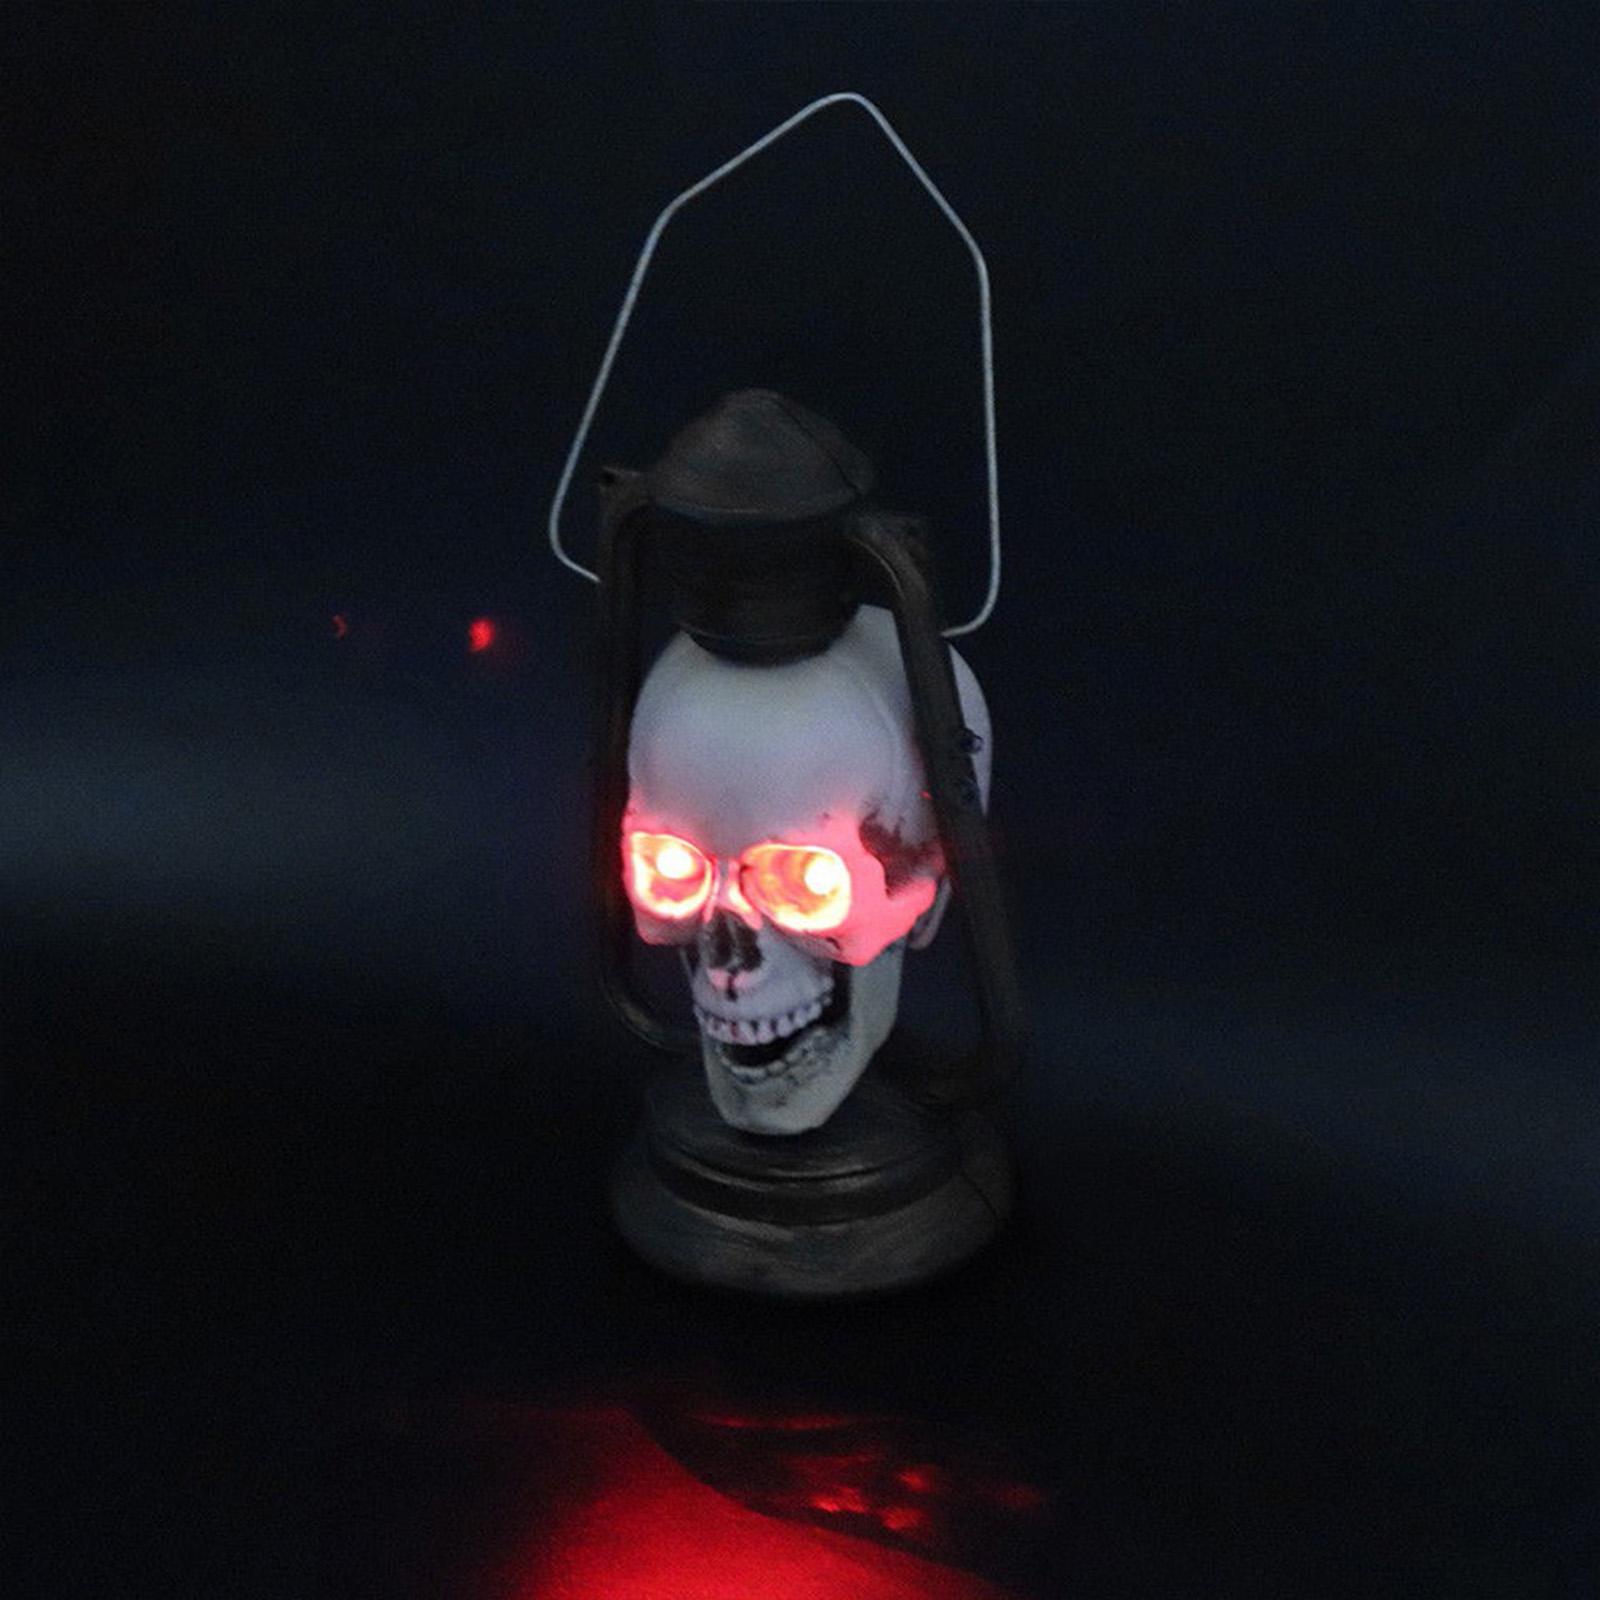 Scary Hanging Halloween Skull Lantern Light Toy Festival Supply Photo Props